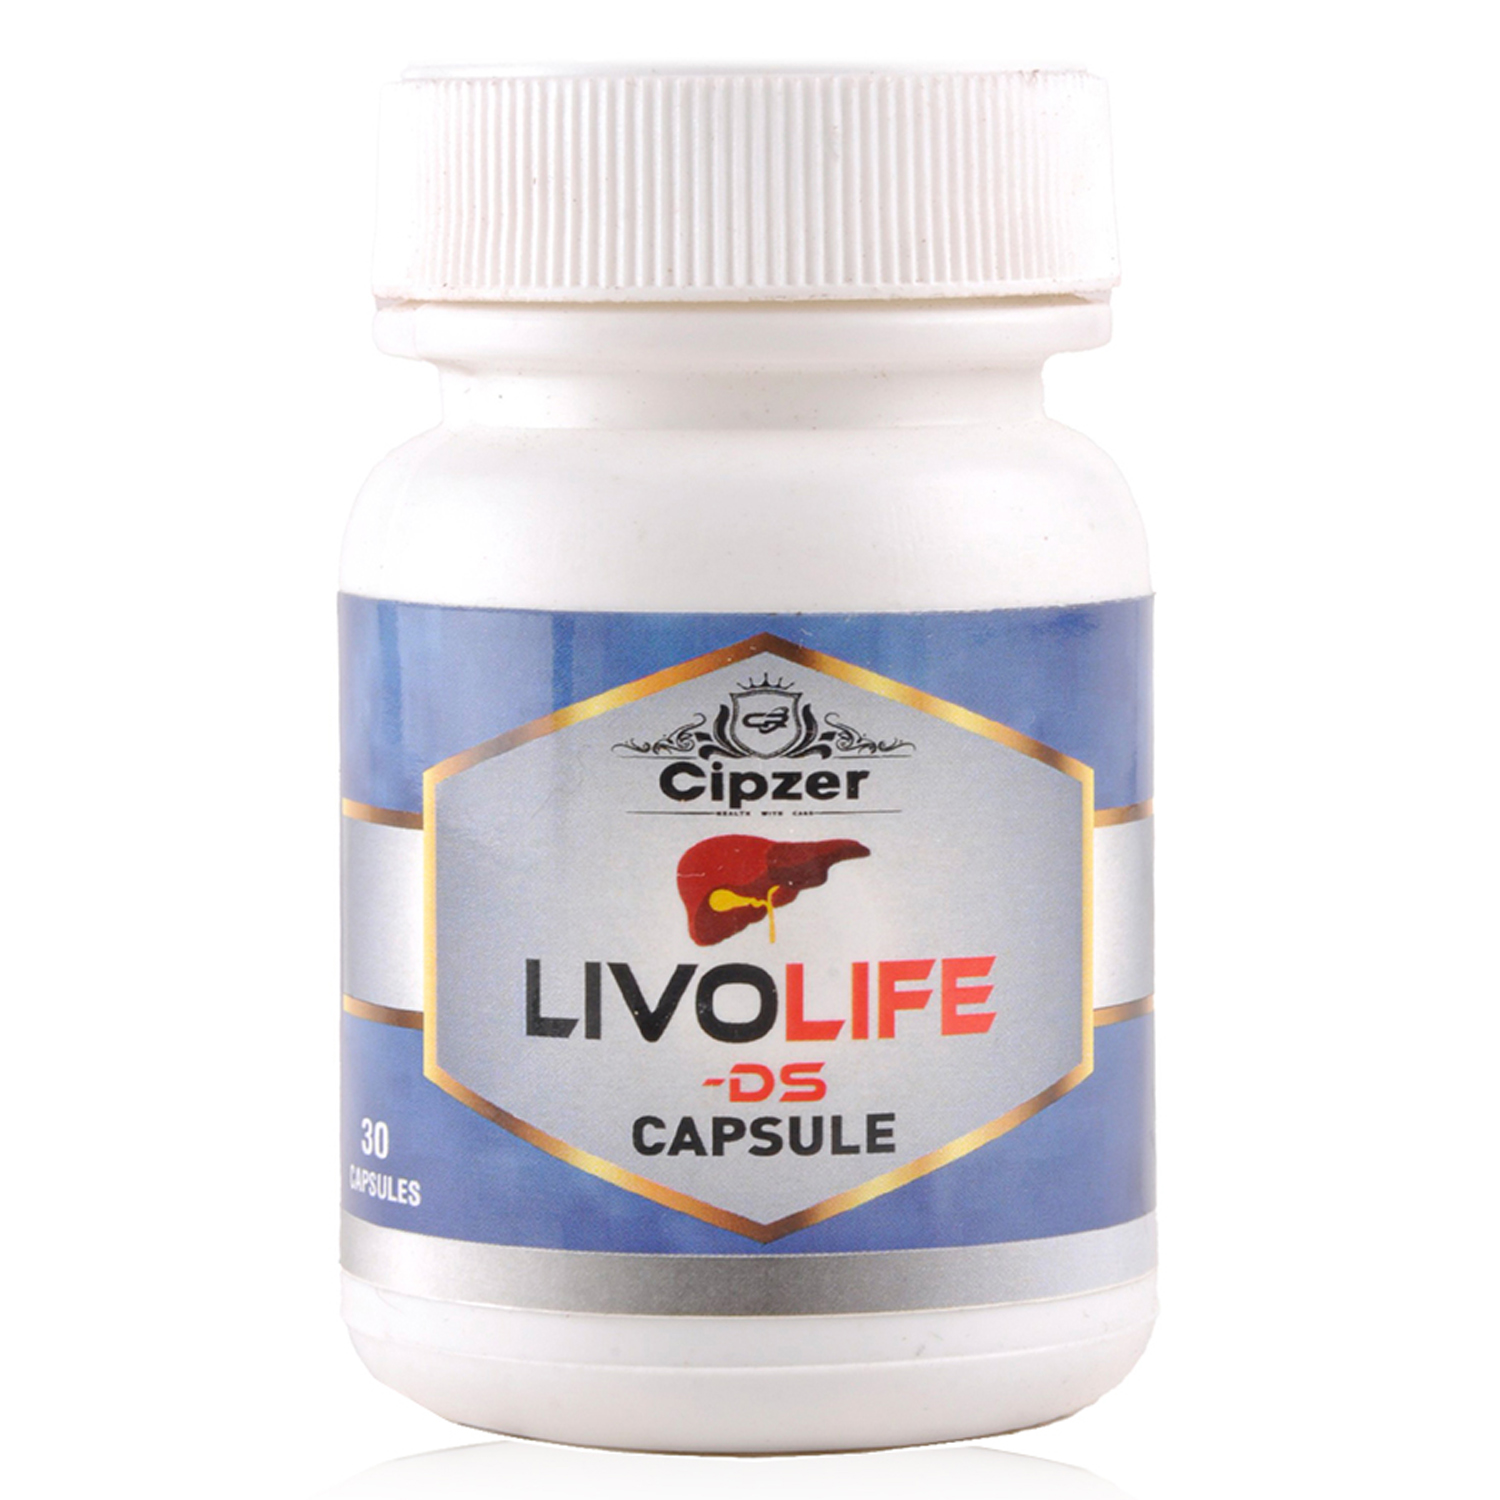 Buy Cipzer Livolife Ds Capsule at Best Price Online